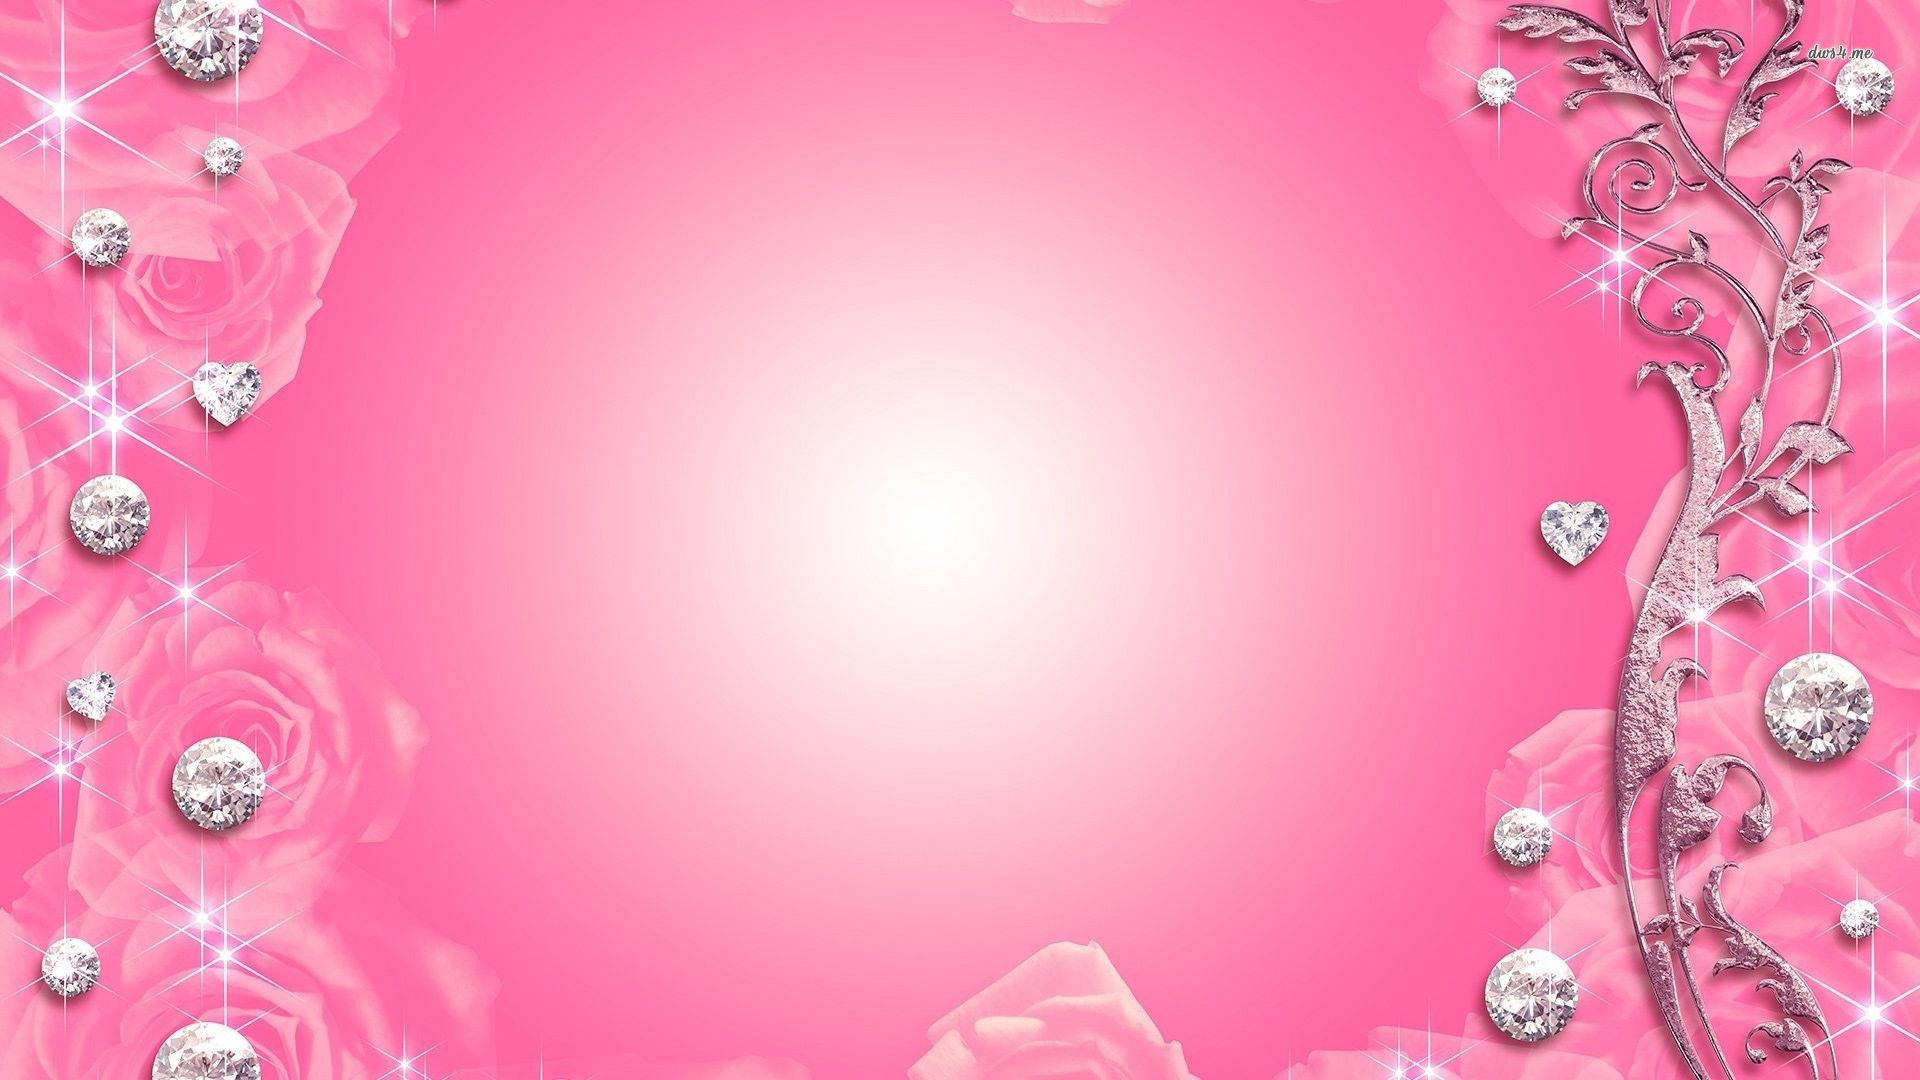 Luxurious Pink Diamonds Woven Amongst Soft Roses Background